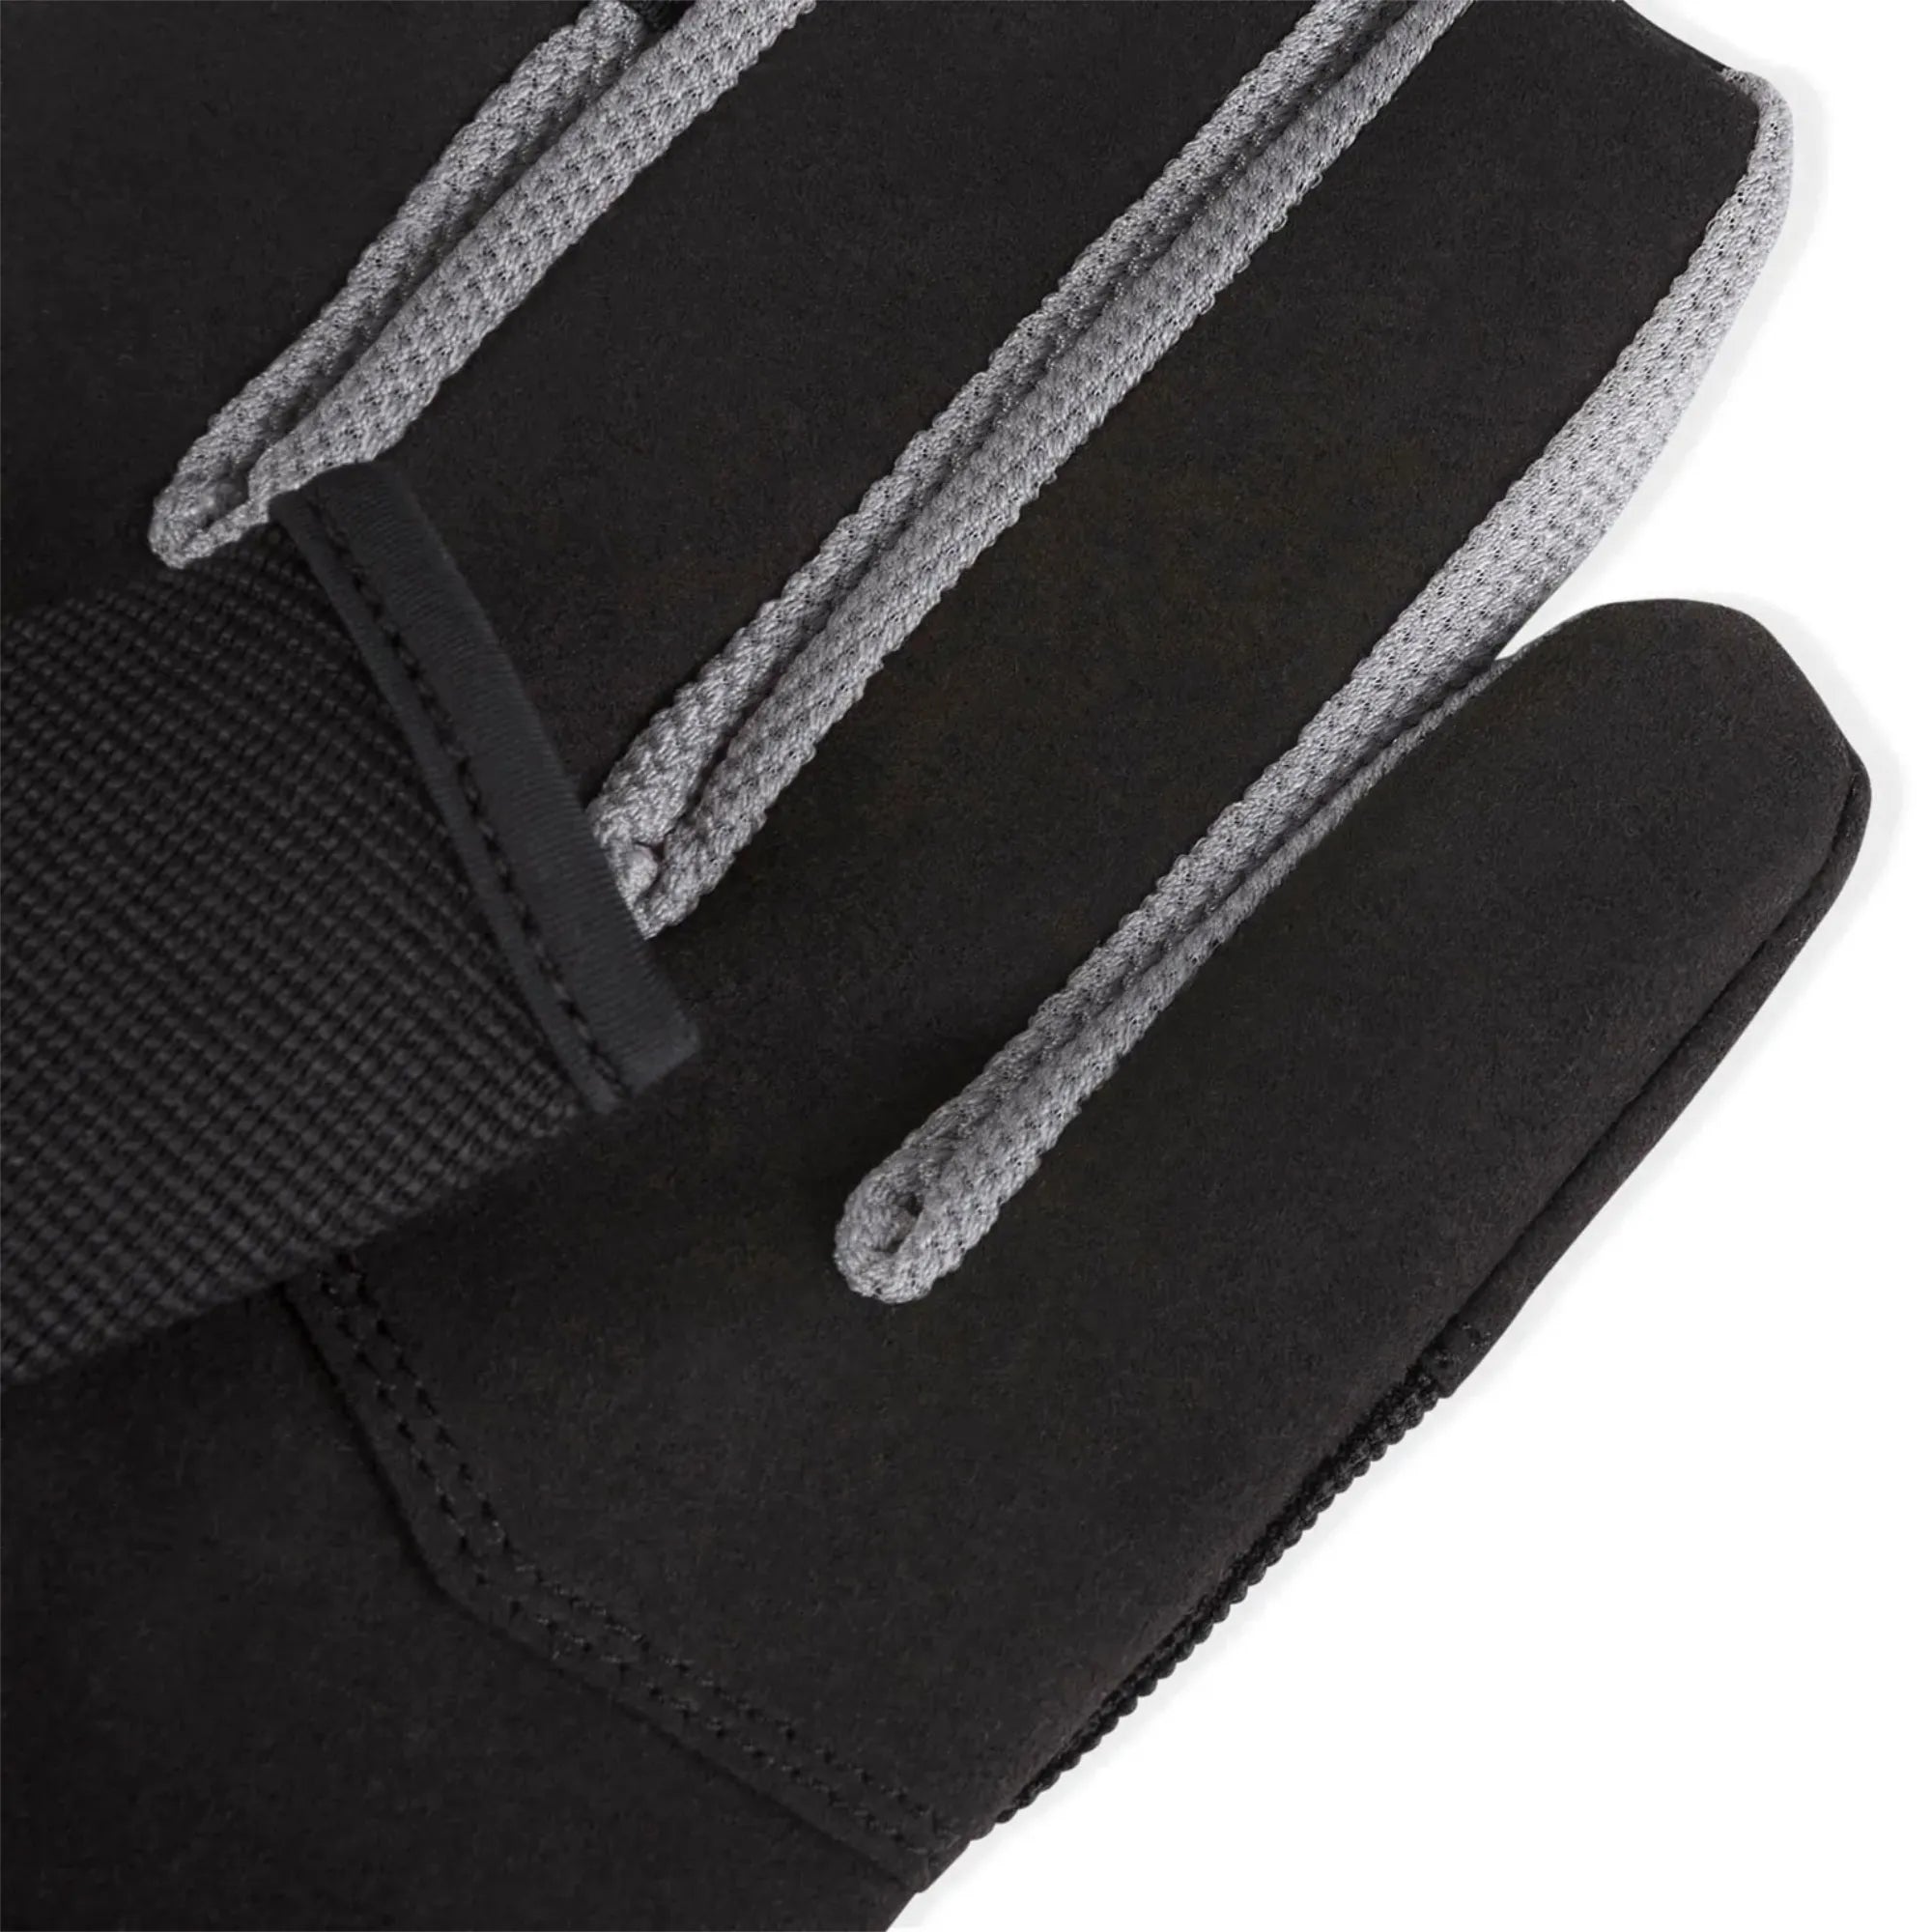 Essential Sailing Long Finger Glove - Black